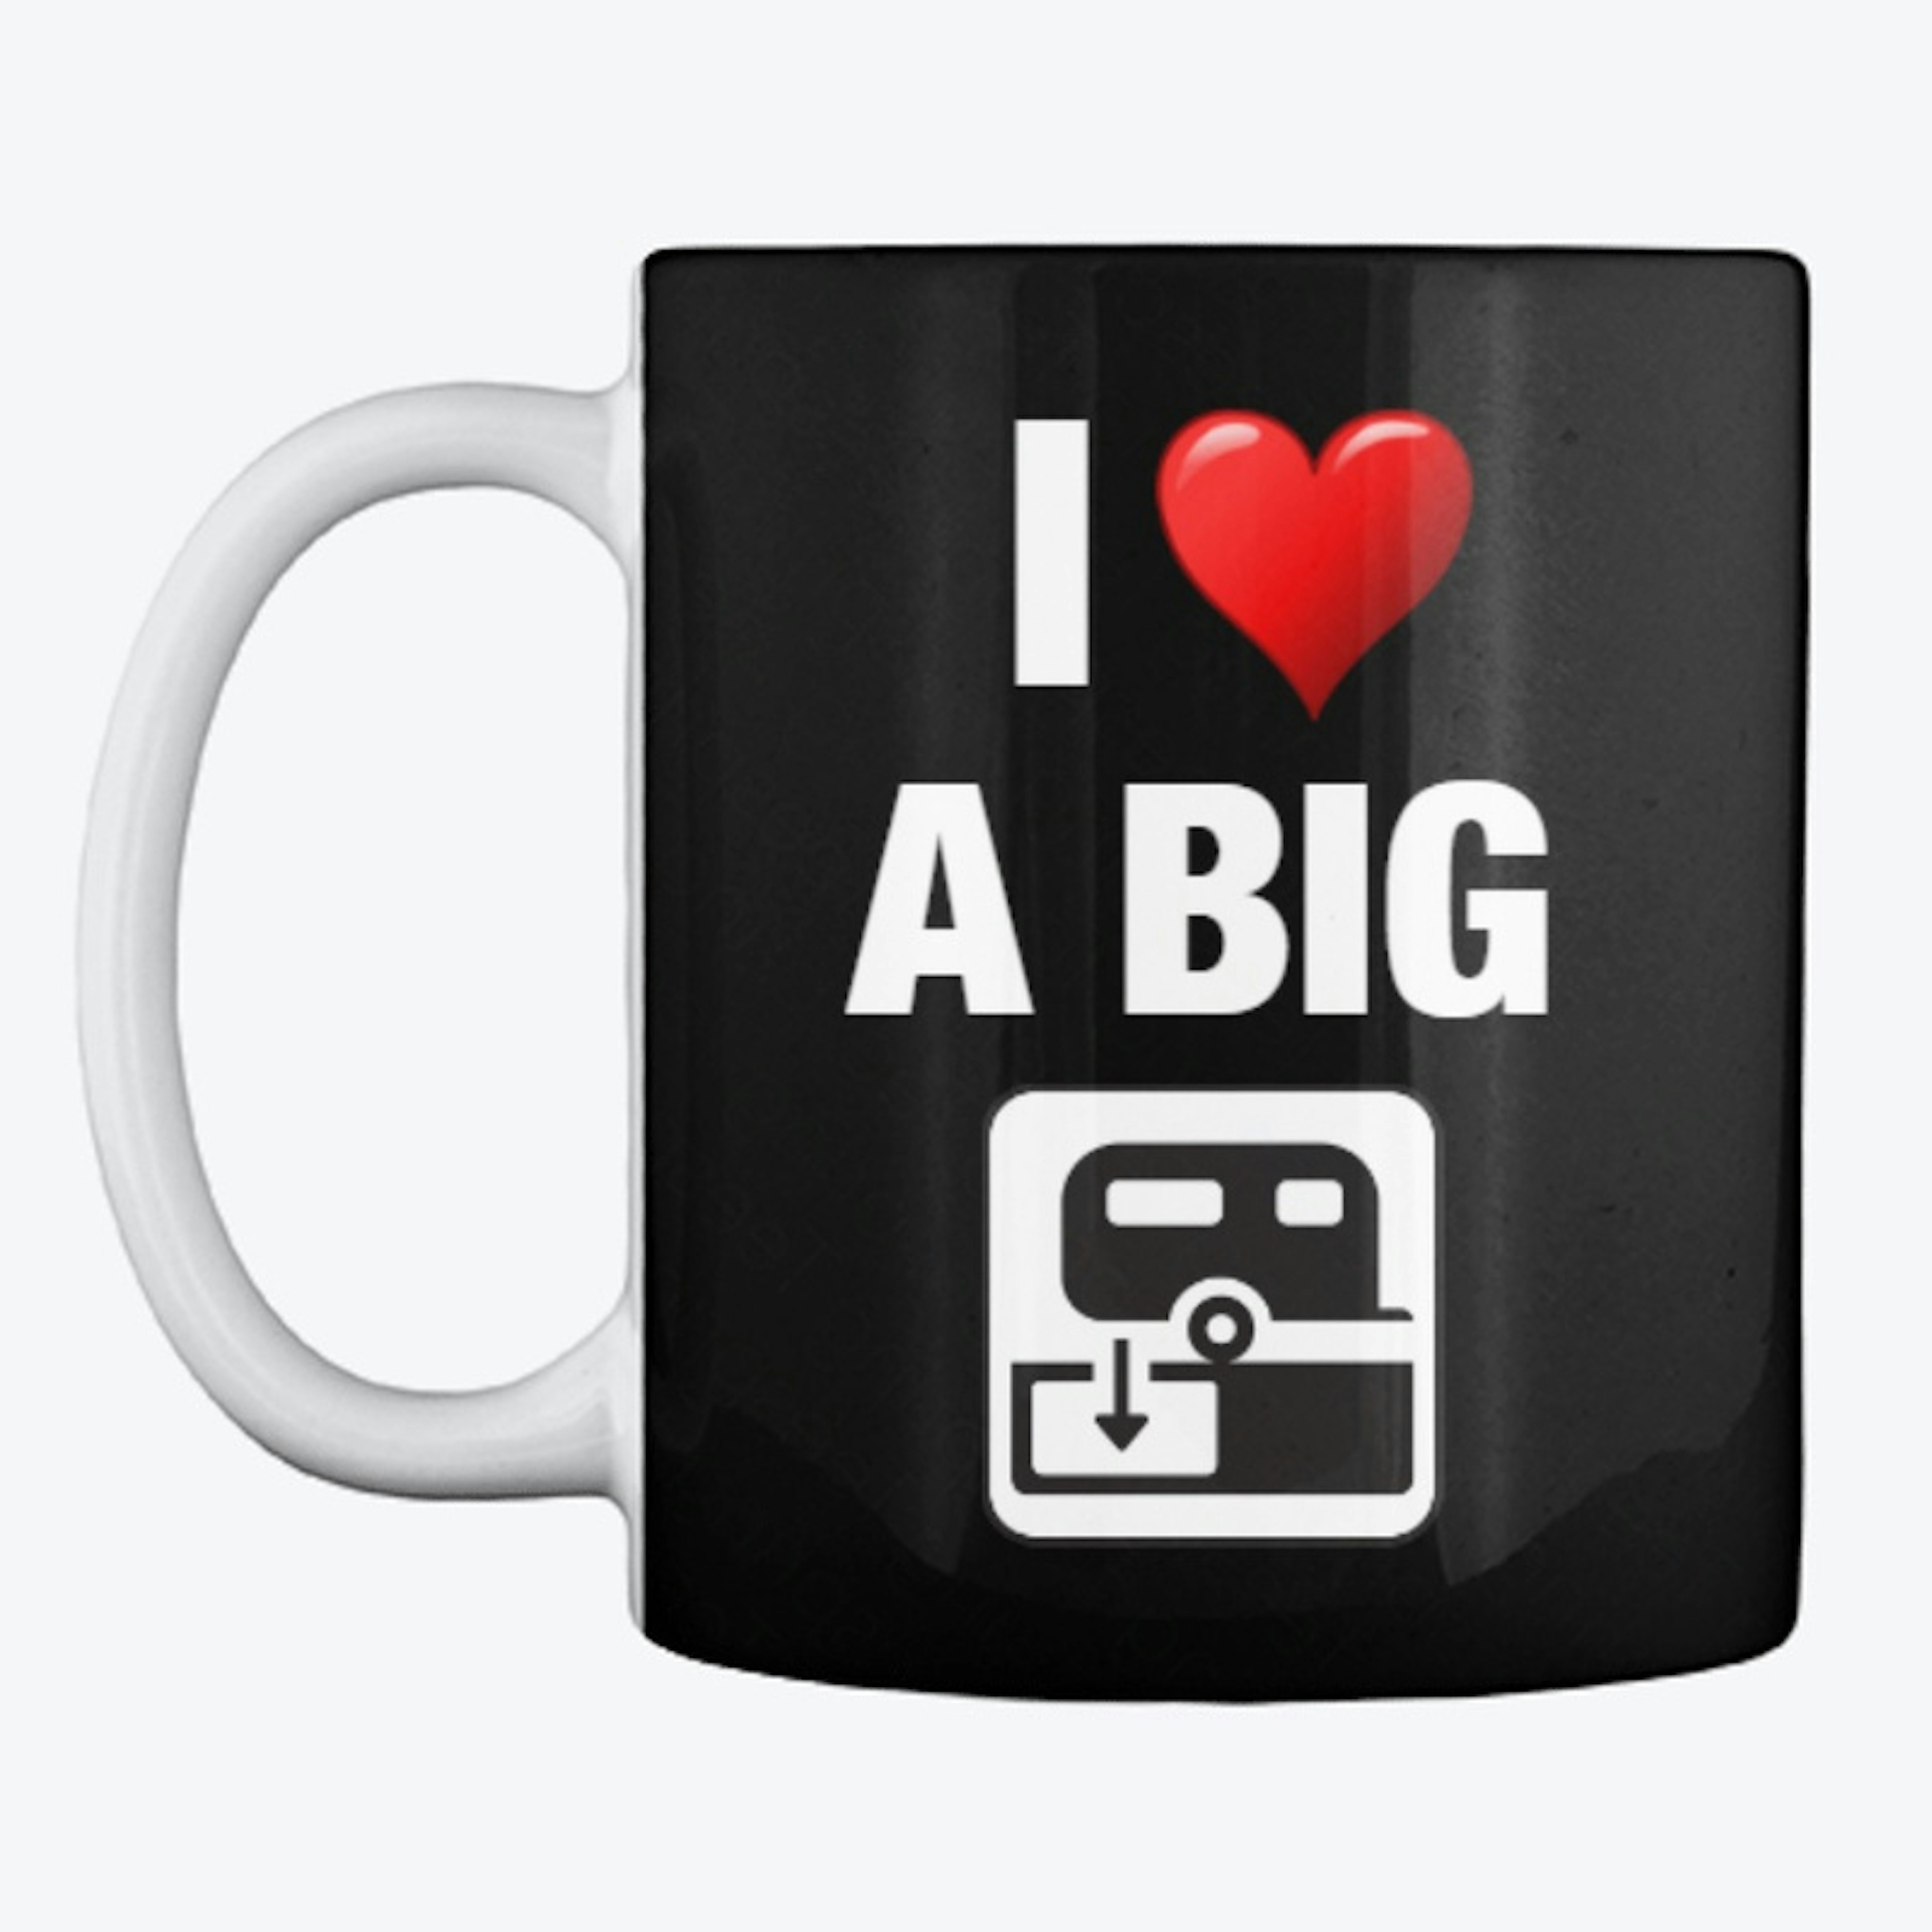 "I Love a Big Dump" logo camping mug